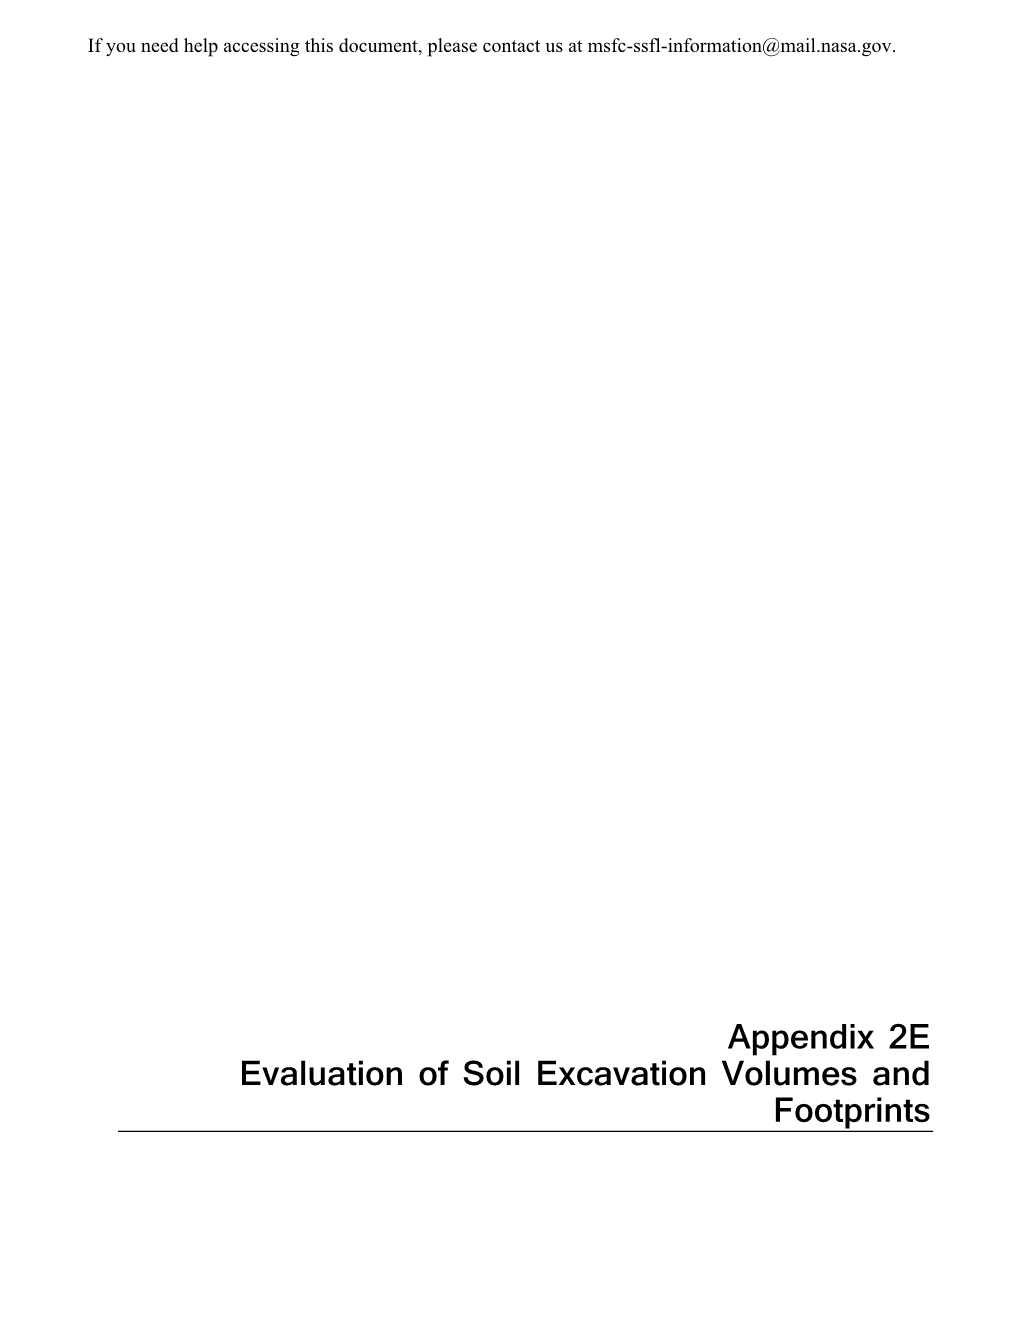 Appendix 2E Evaluation of Soil Excavation Volumes and Footprints